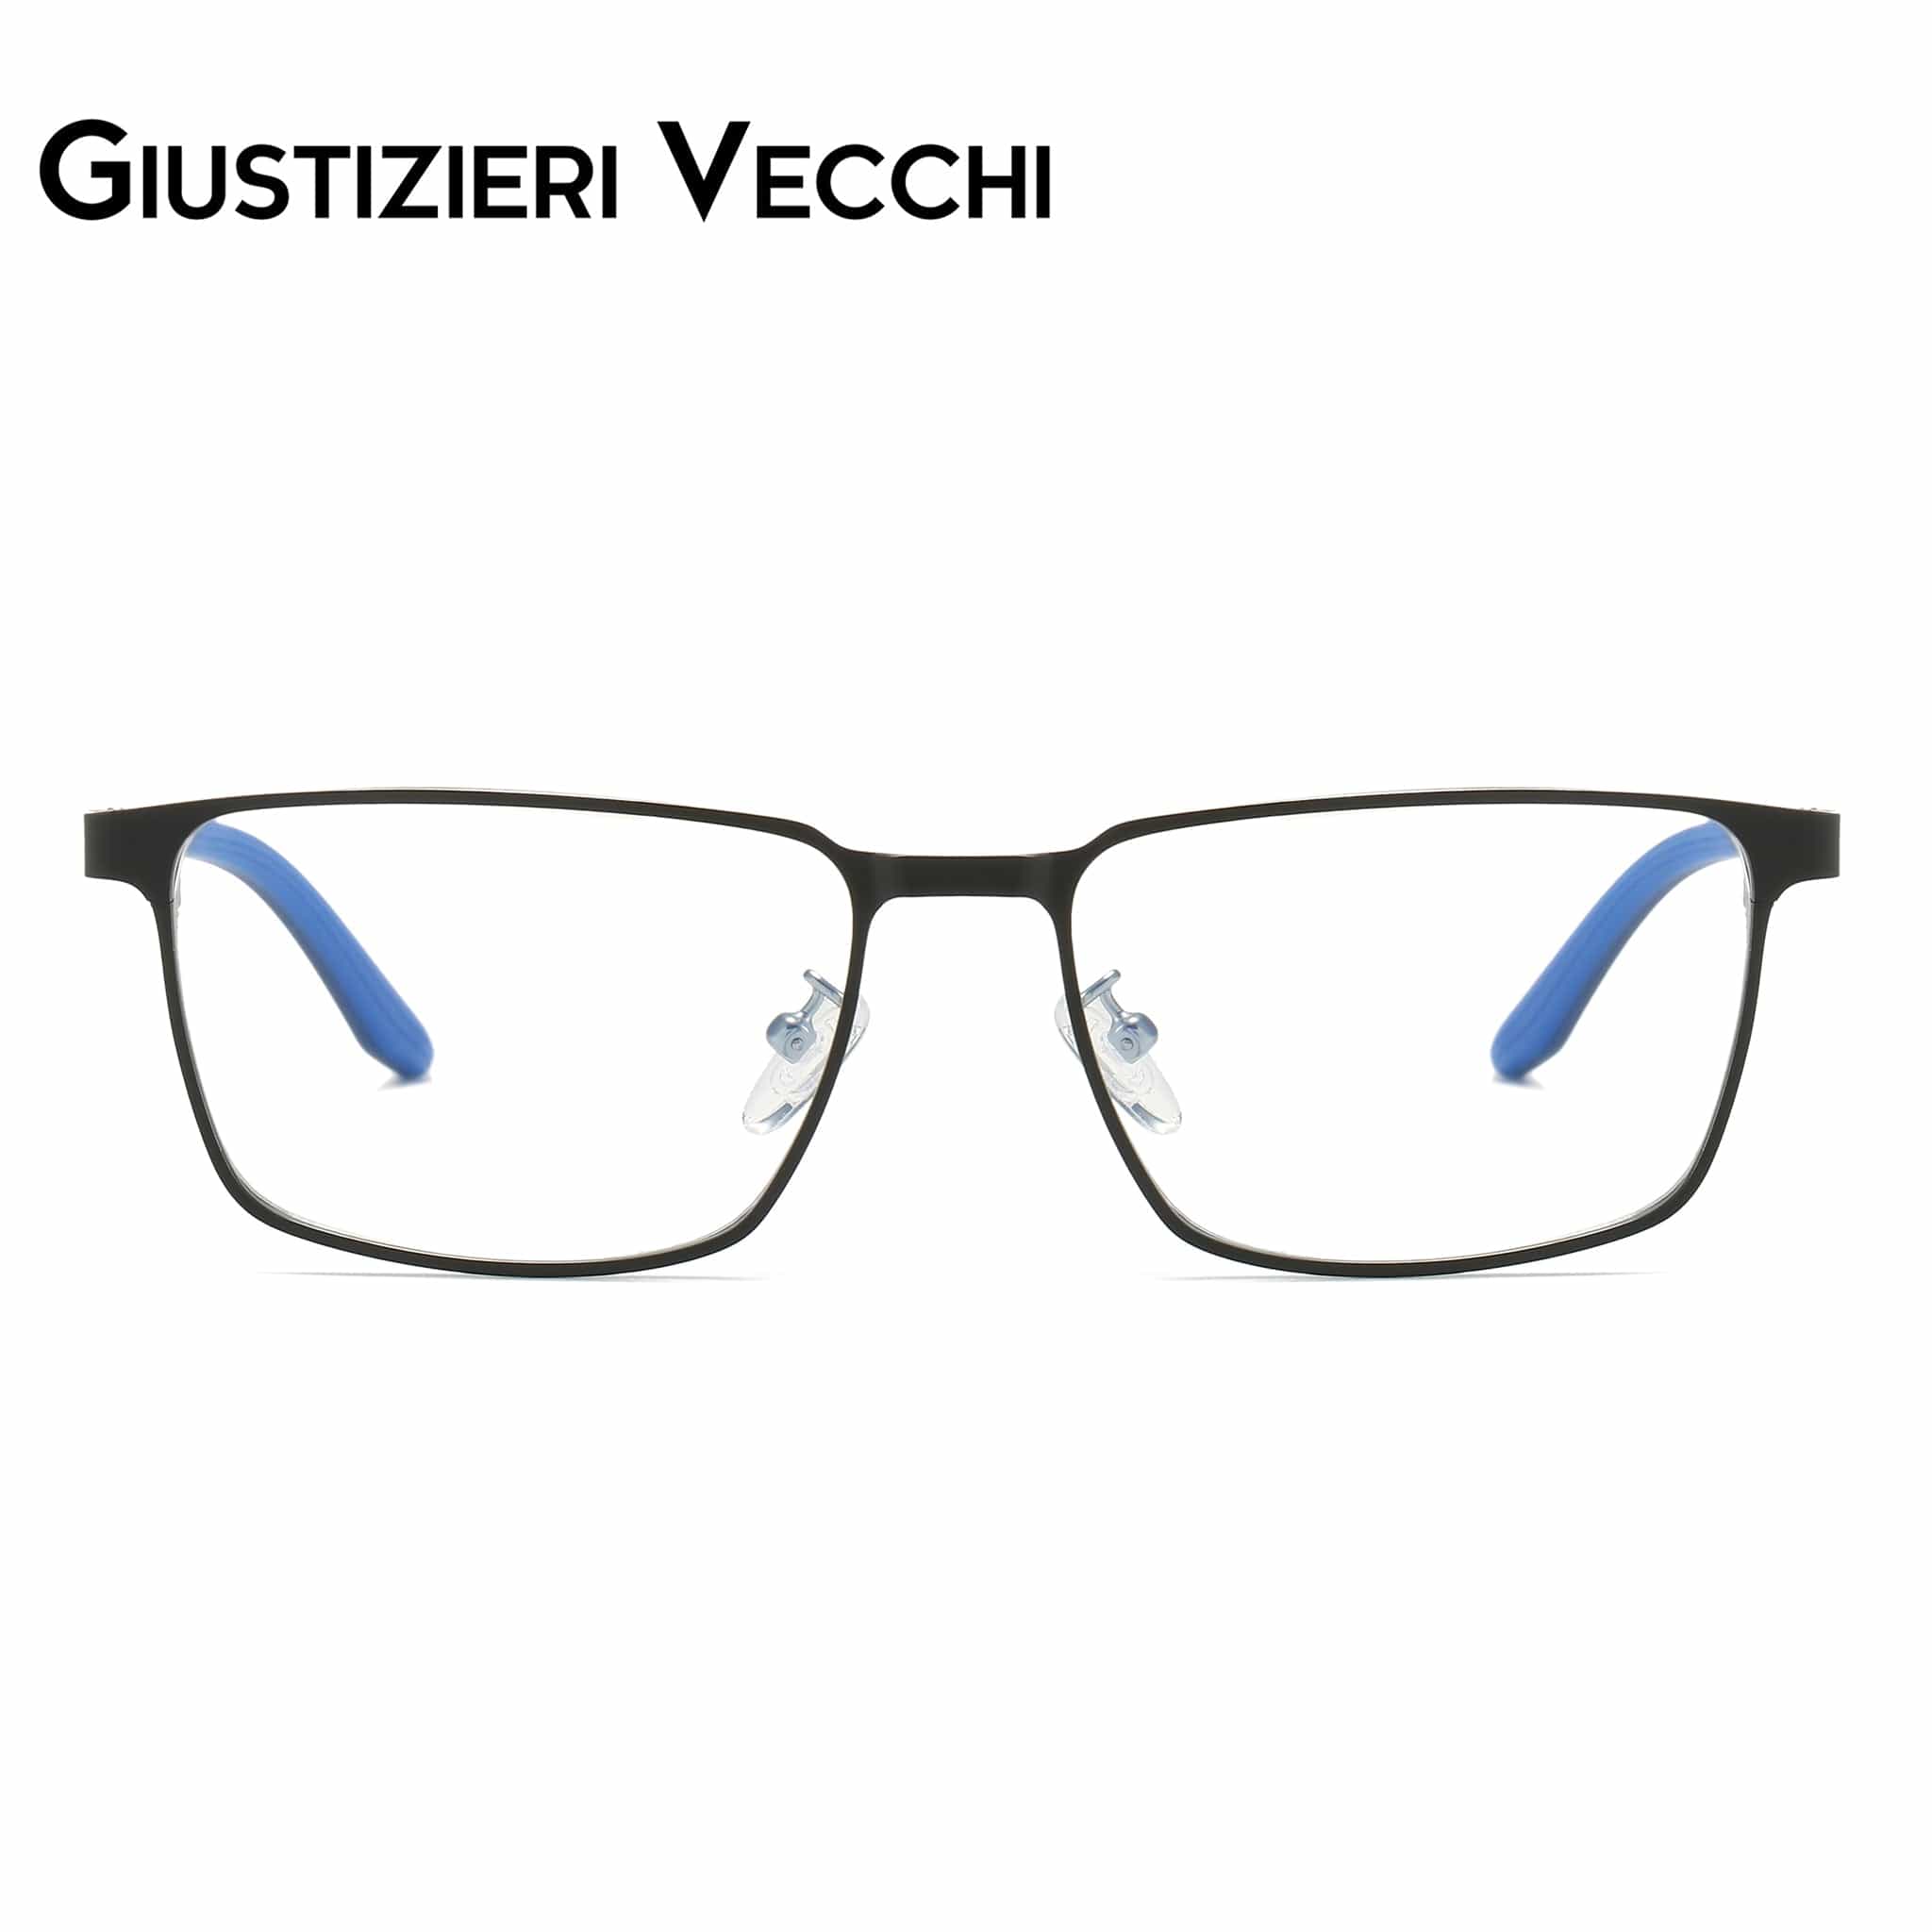 GIUSTIZIERI VECCHI Eyeglasses Large / Black with Blue IceSurf Duo